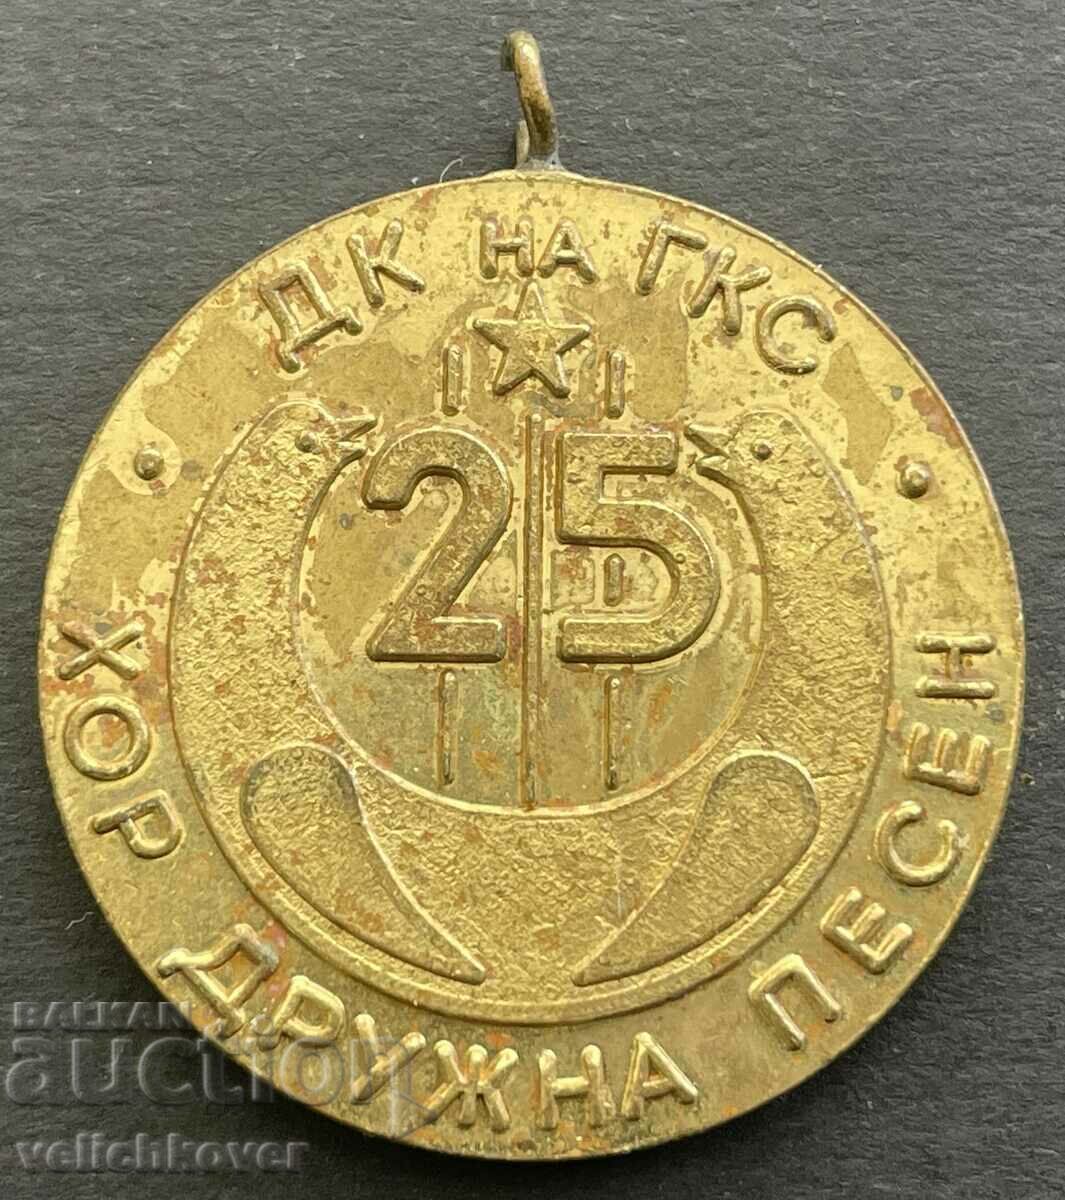 37627 България медал 25г. Хор Дружна песен 1977г.